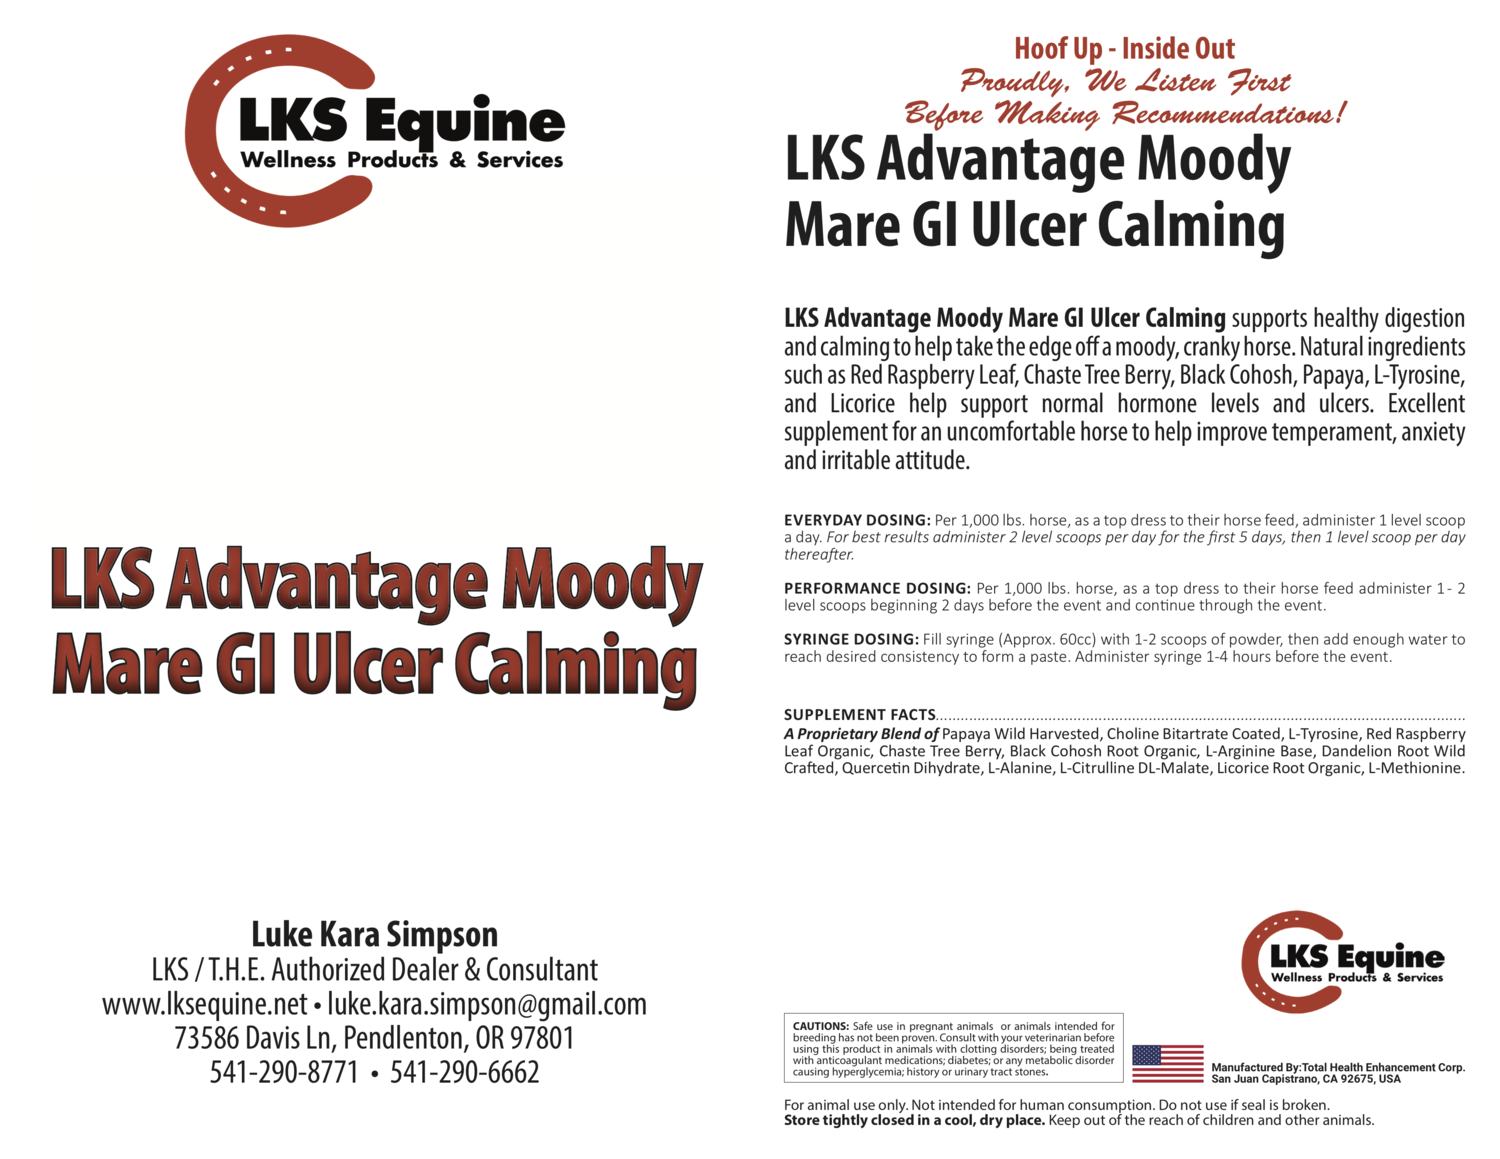 LKS Advantage Moody Mare GI Ulcer Calming